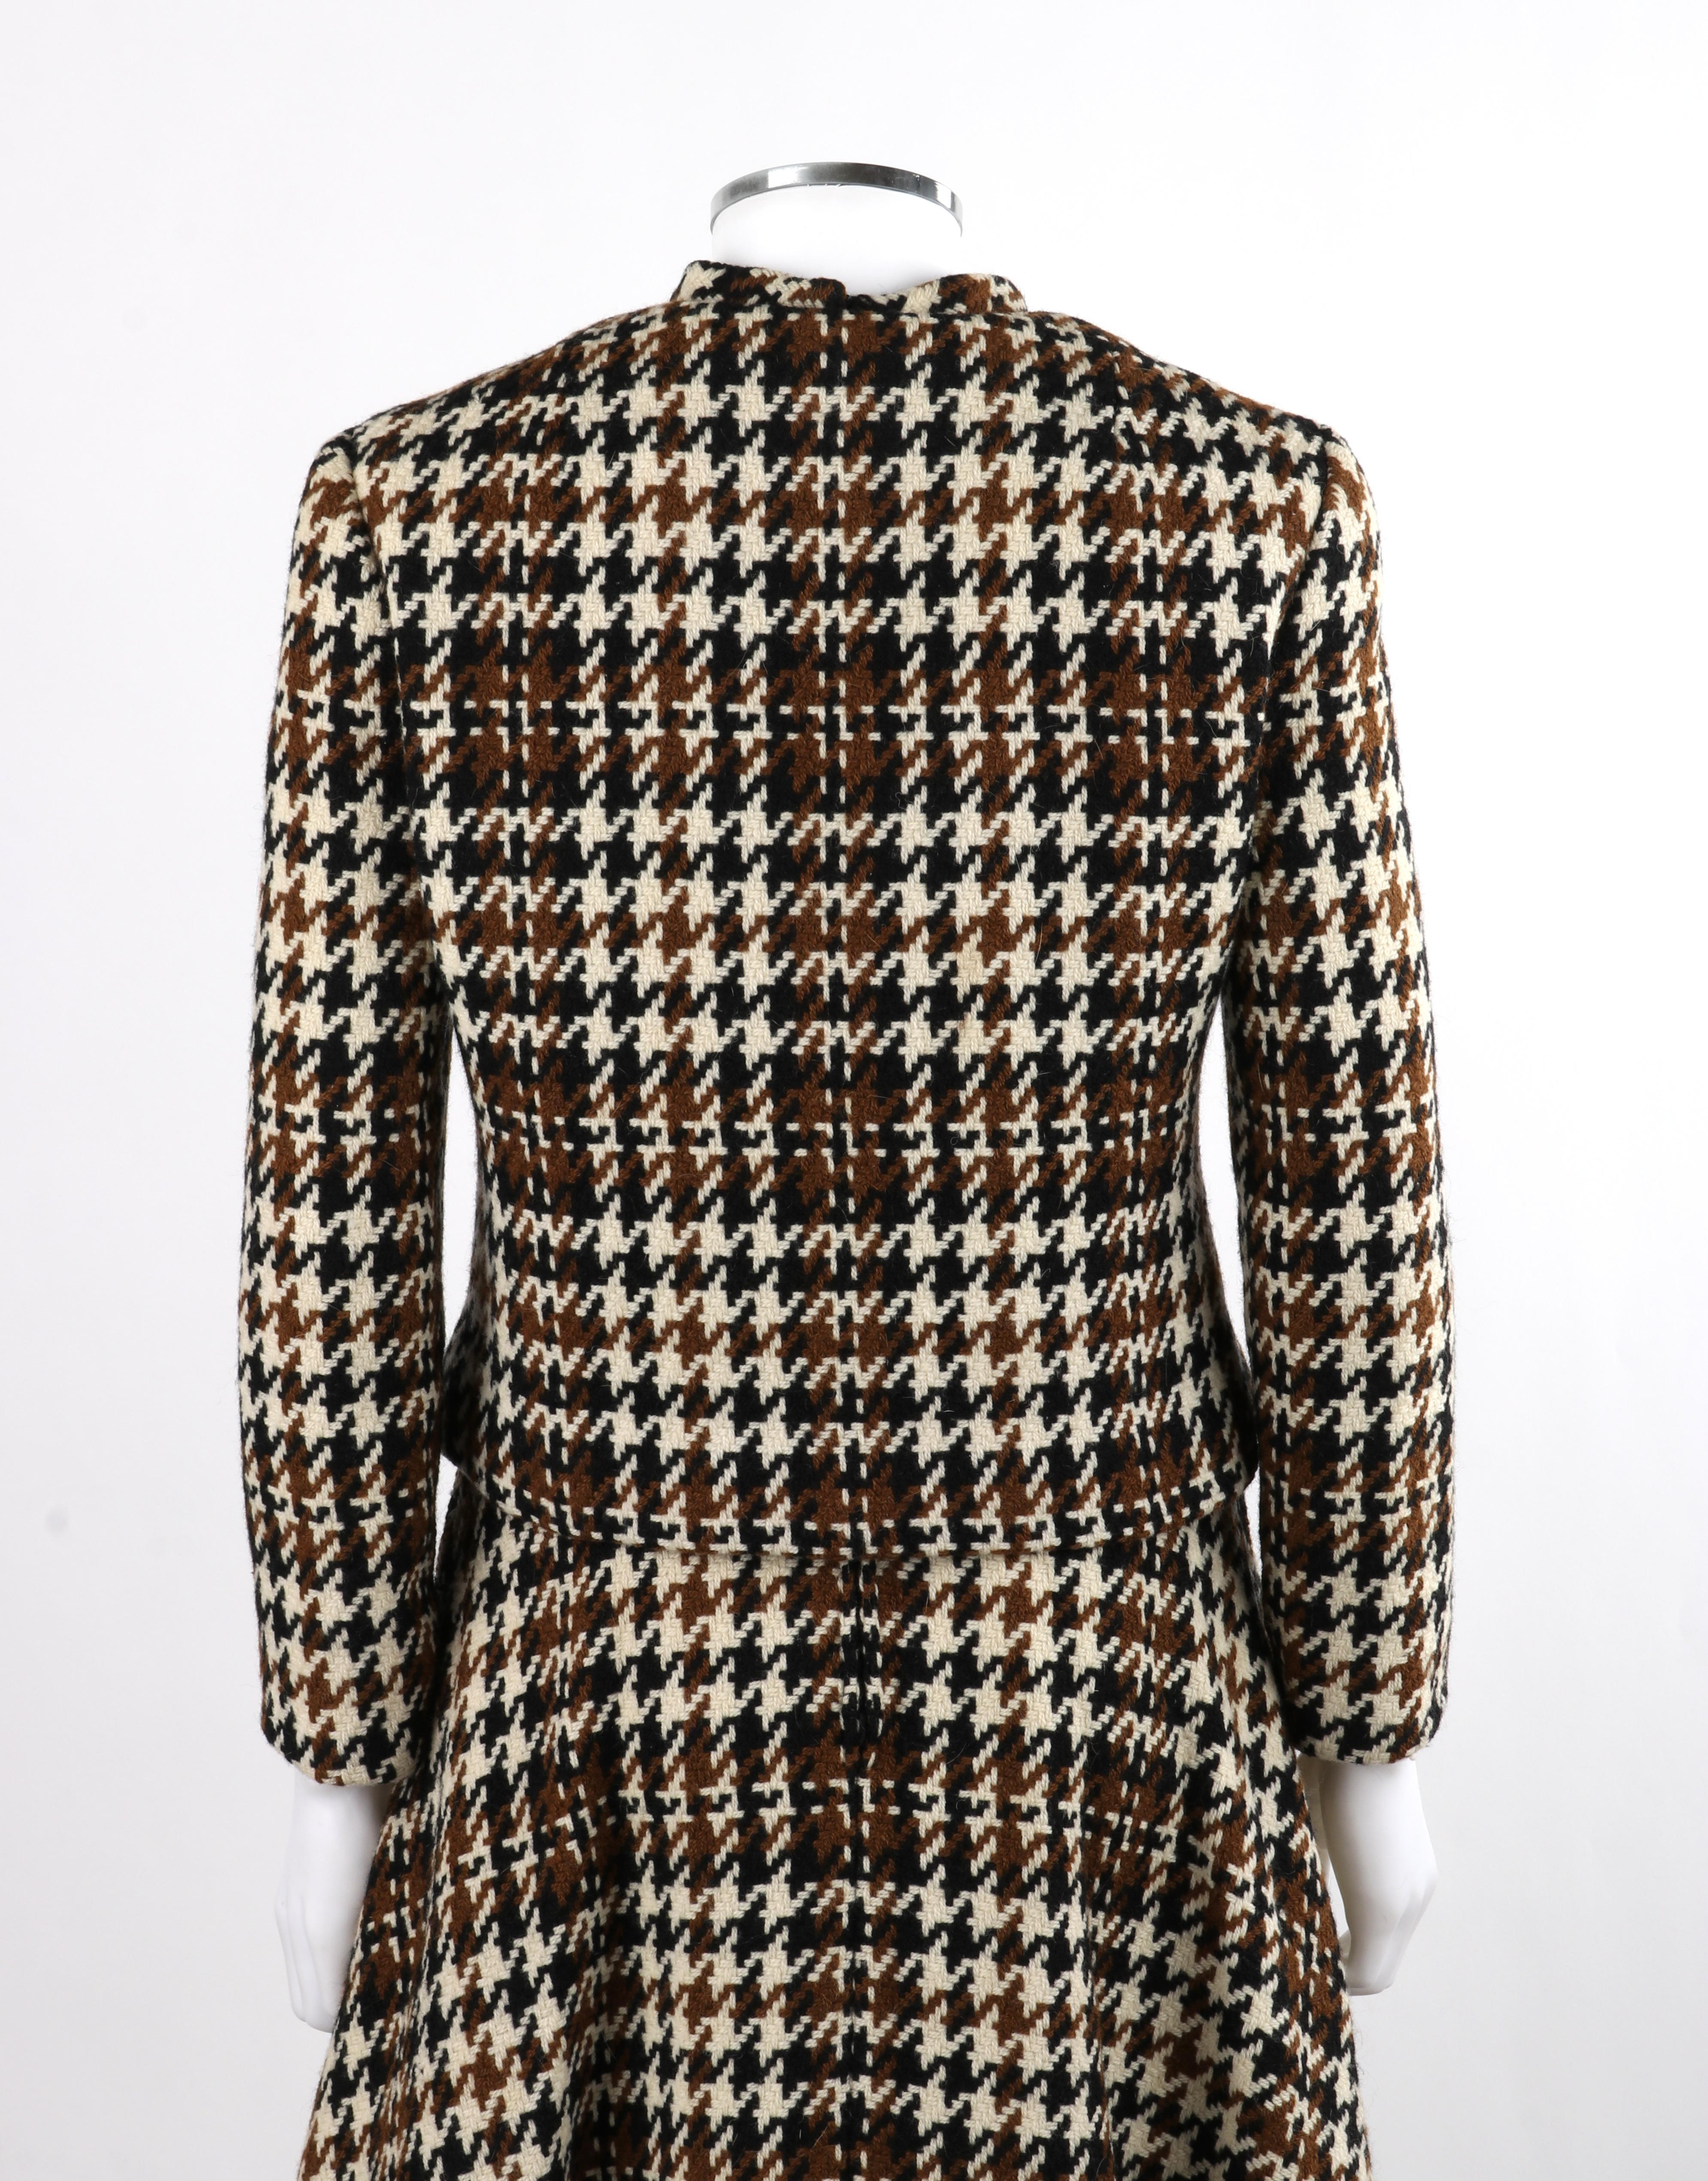 Women's DEBSHIRE ORIGINAL c.1960’s Multicolor Houndstooth Knit A-Line Dress Jacket Set